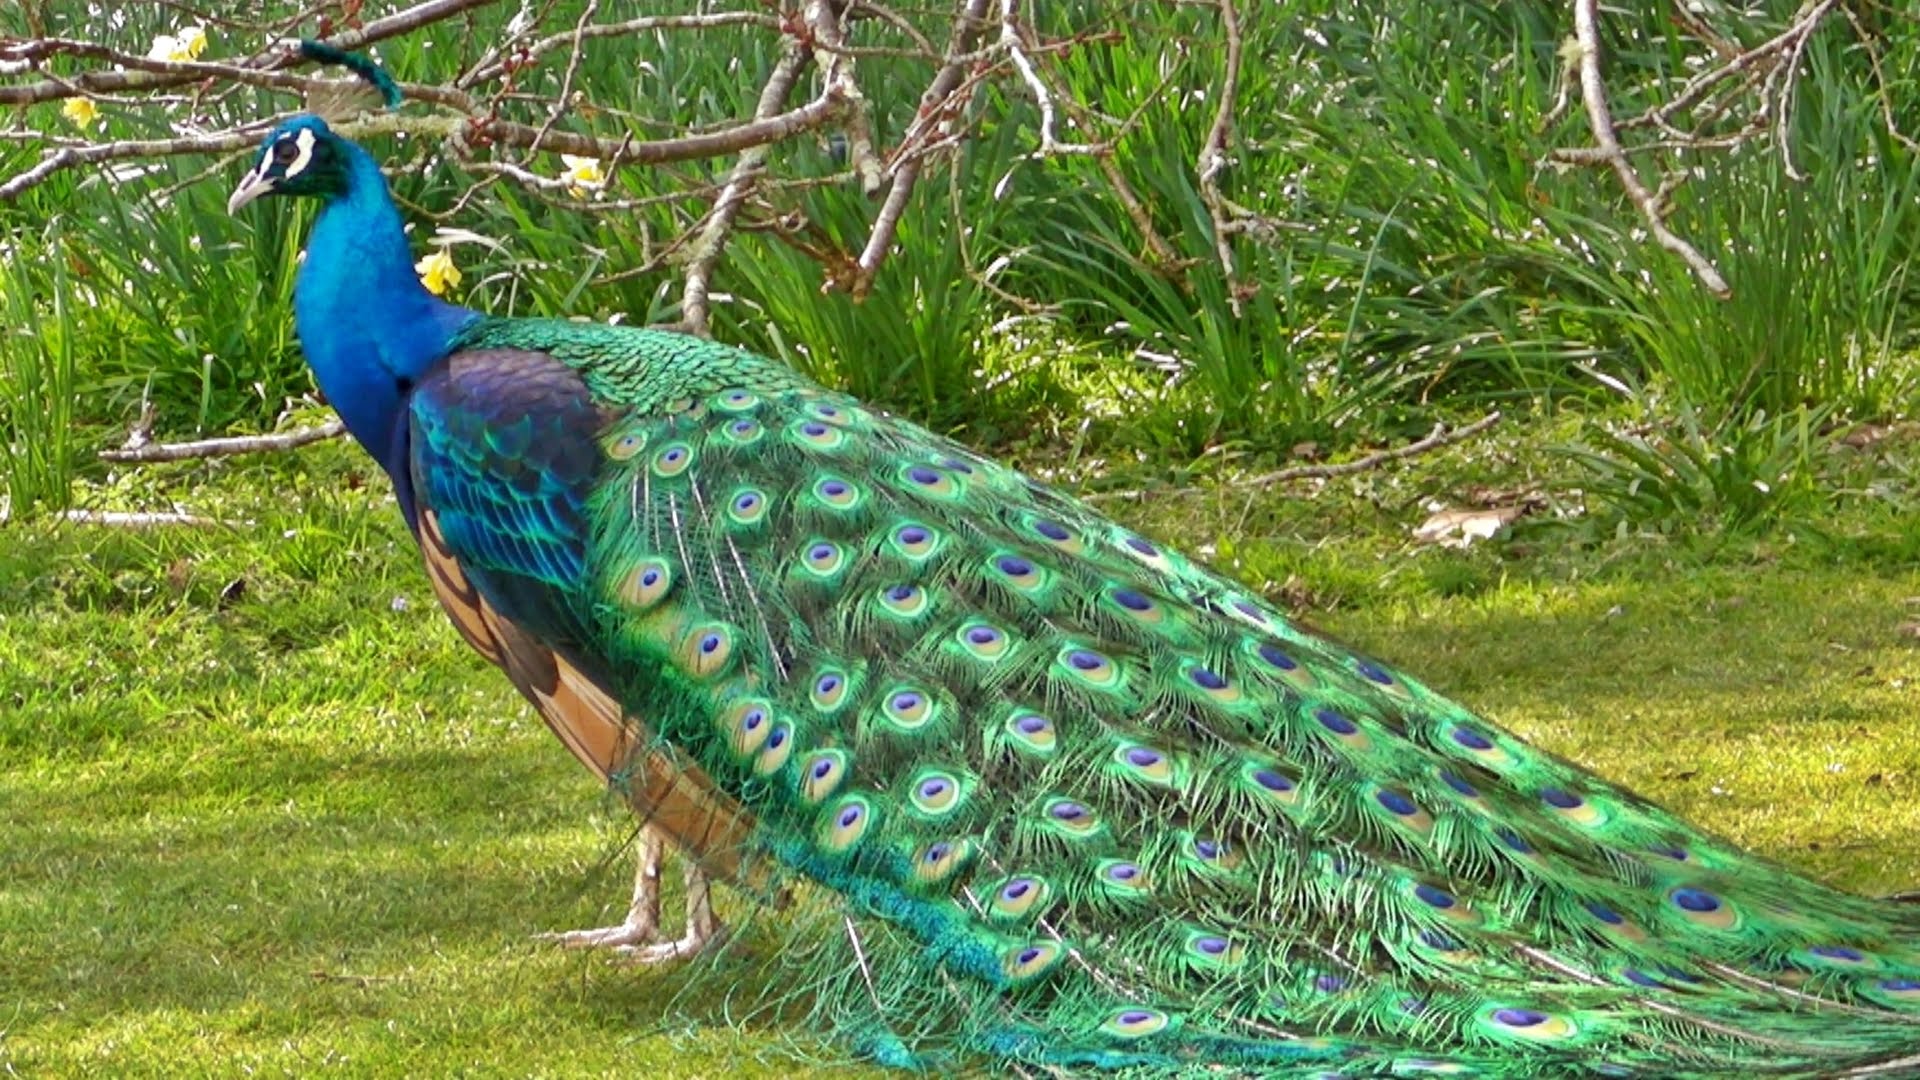 so nice peacock image